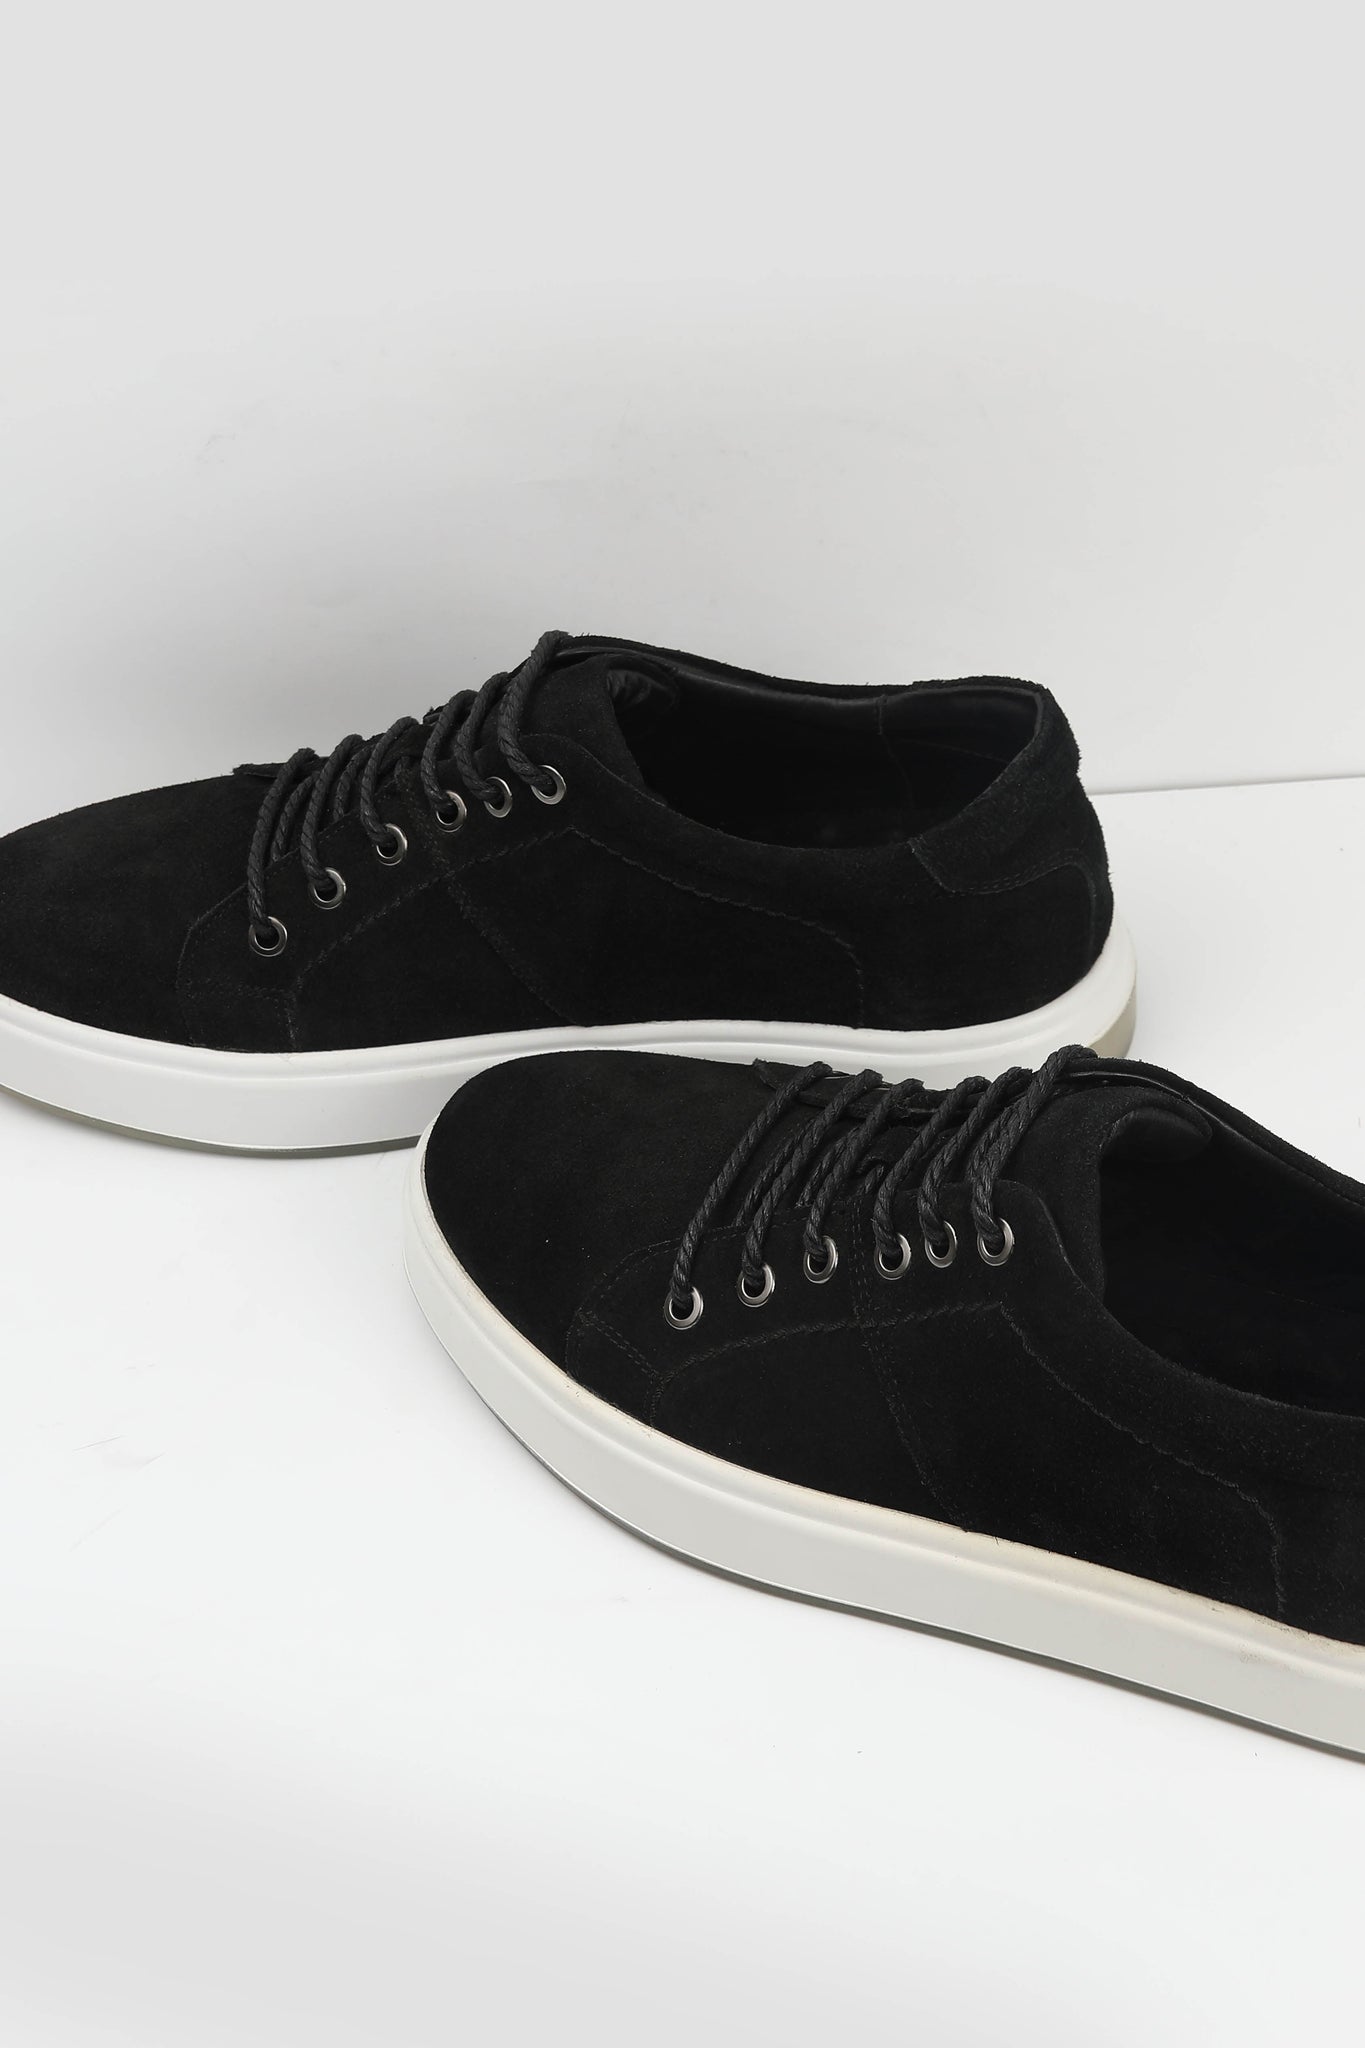 Star Sneaker - Pronto Men Shoes - Casual